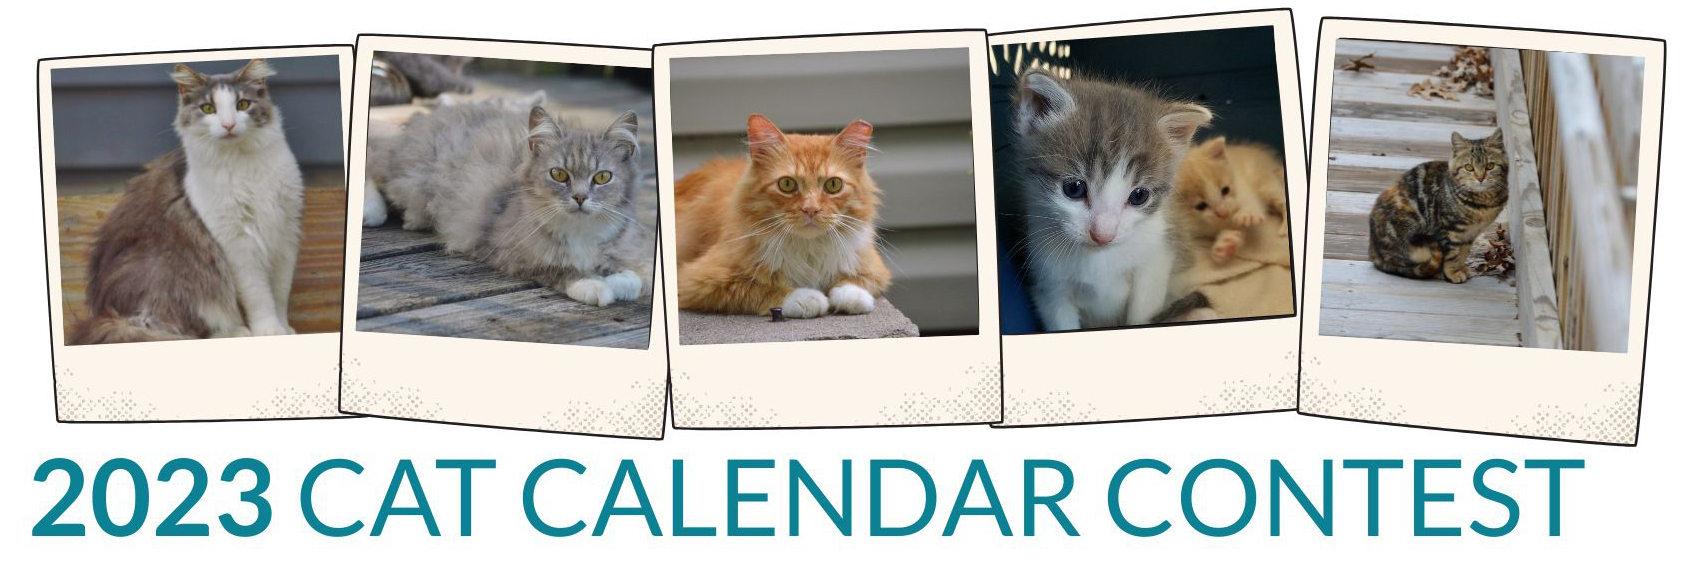 Alley Cat Advocates 2023 Cat Calendar Contest